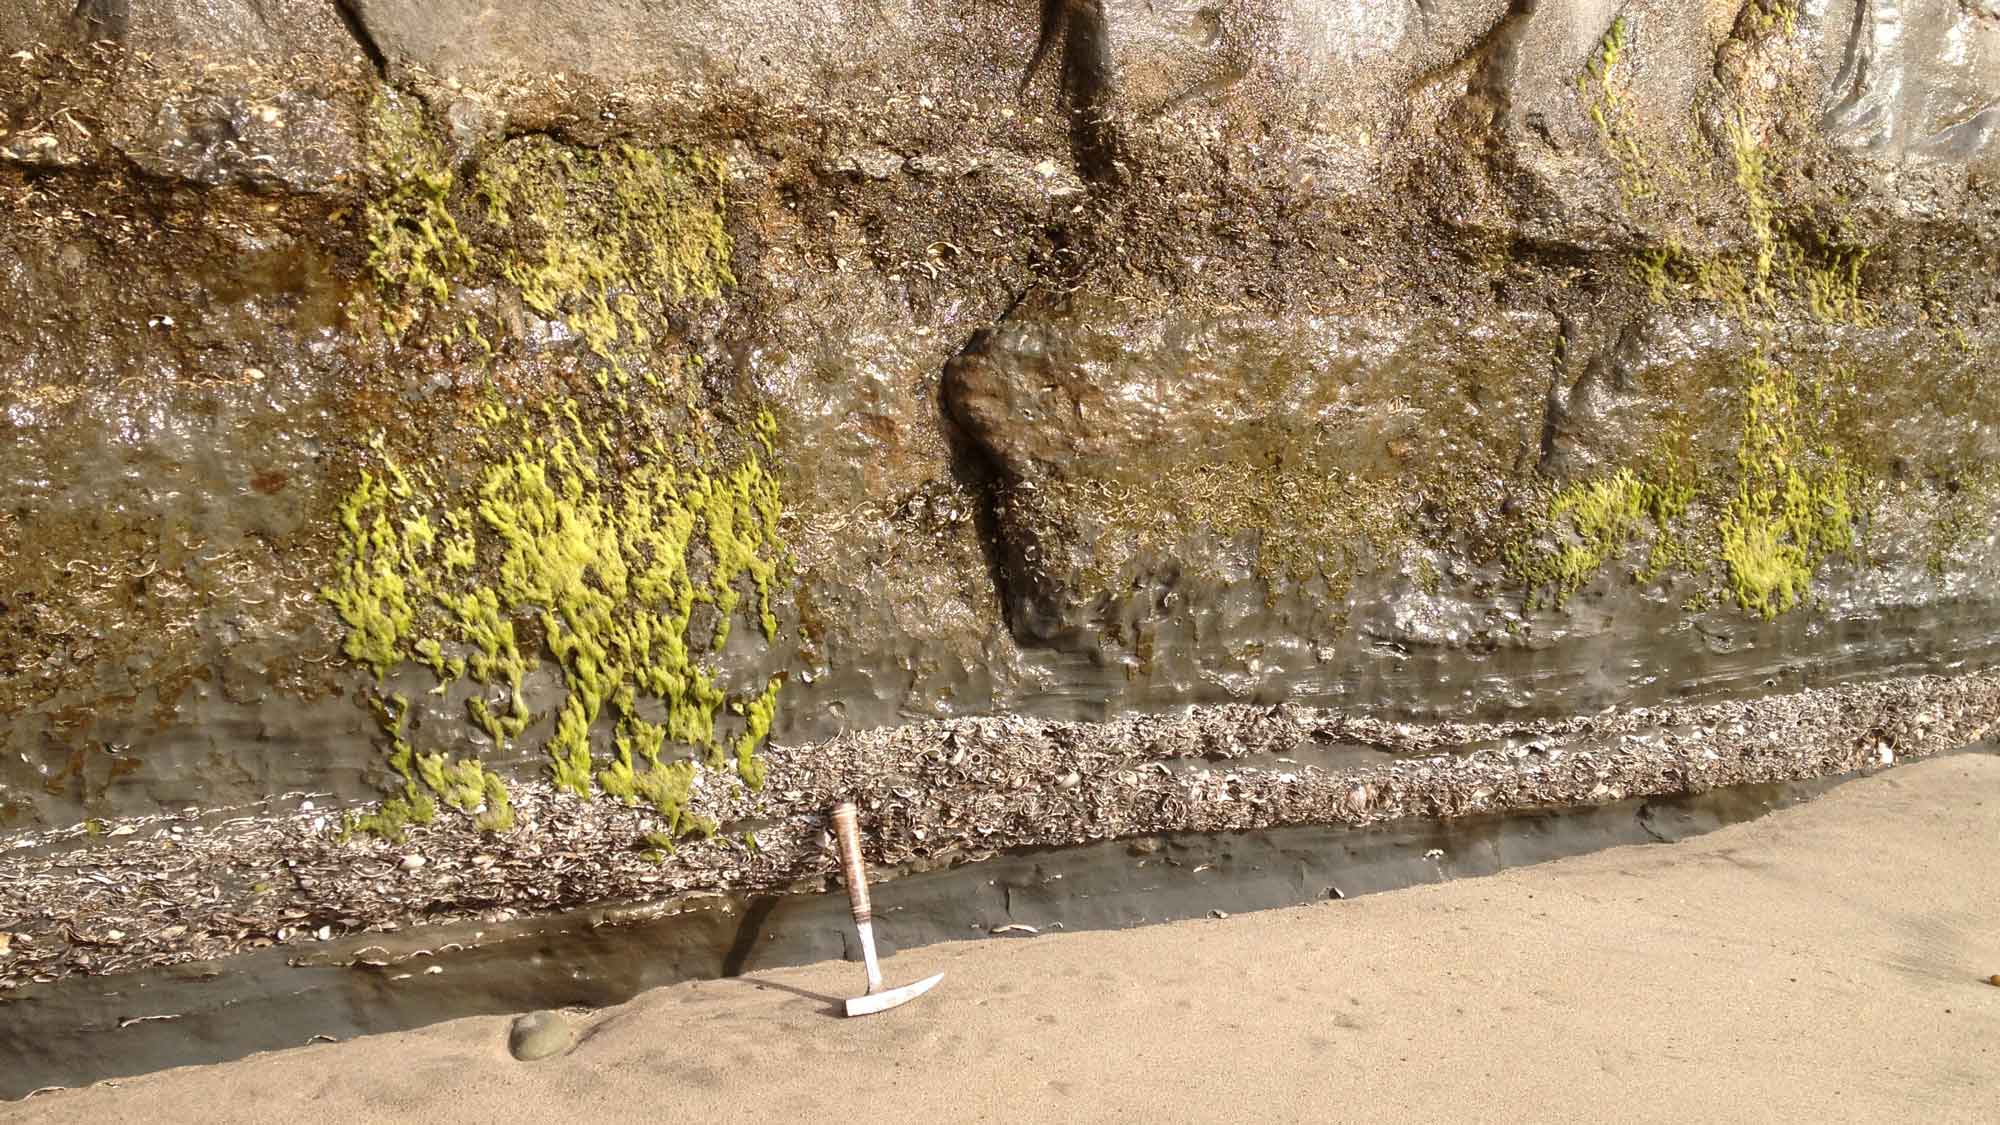 Photograph of fossiliferous strata of the Purisima Formation exposed at Capitola Beach, Capitola, California.